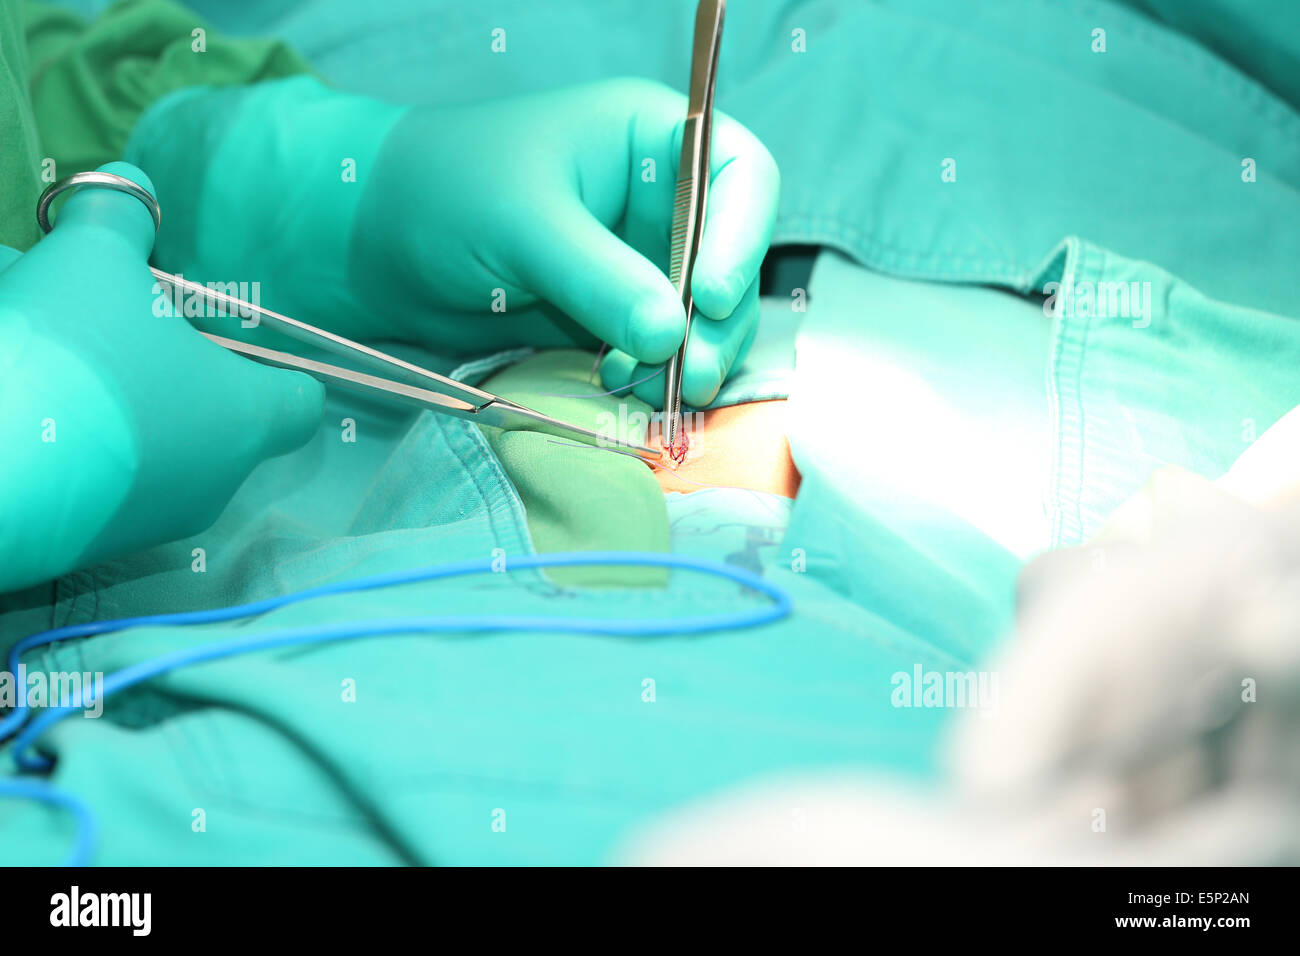 Surgeon hands suturing an hernia Stock Photo